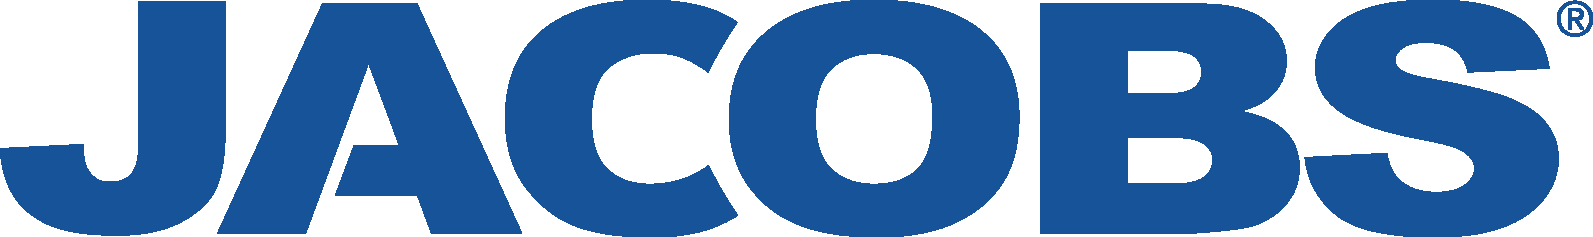 Jacobs Logo [Engineering]